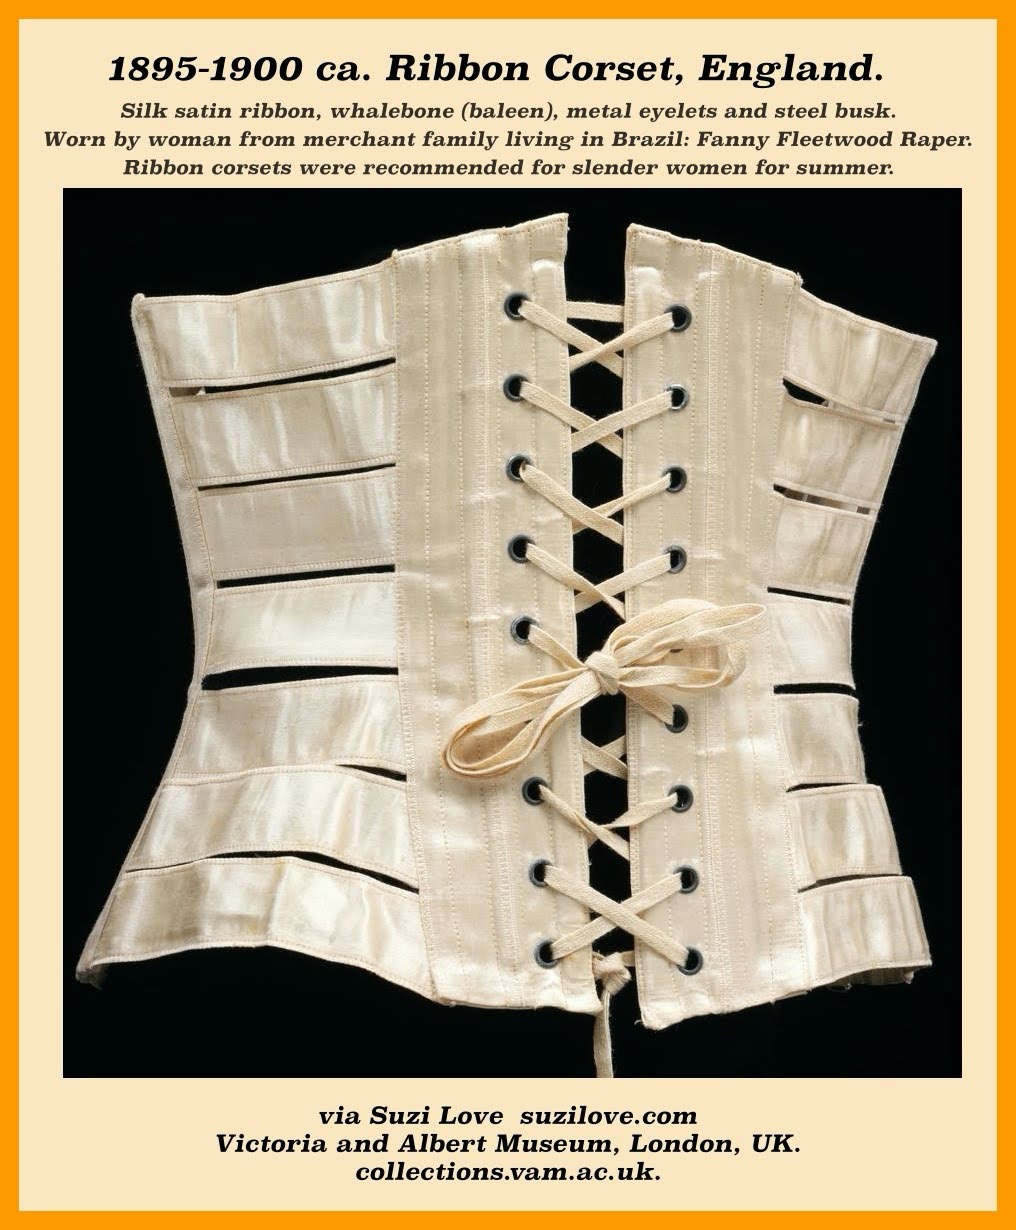 https://suzilove.files.wordpress.com/2021/10/1895-1900_ribbon-corsetengland_-vam_back.jpg